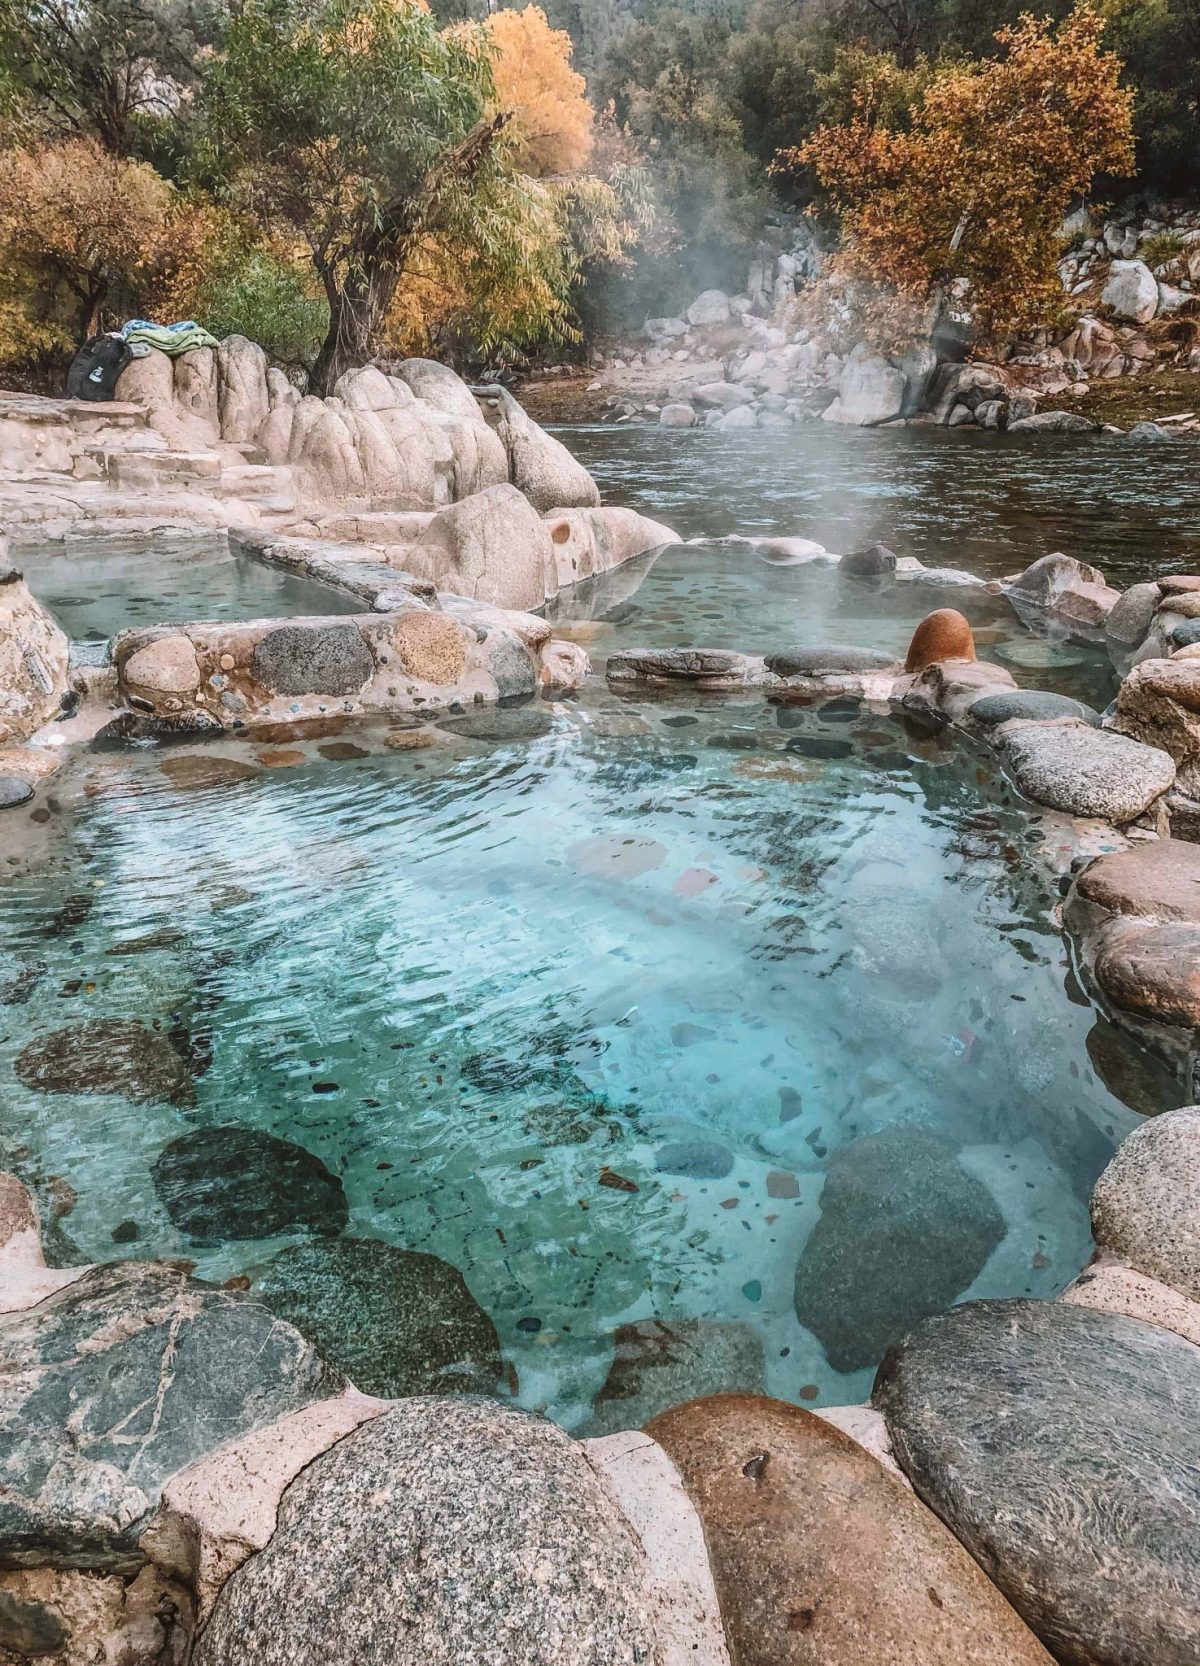 Hot Springs on the Kern River near Bakersfield